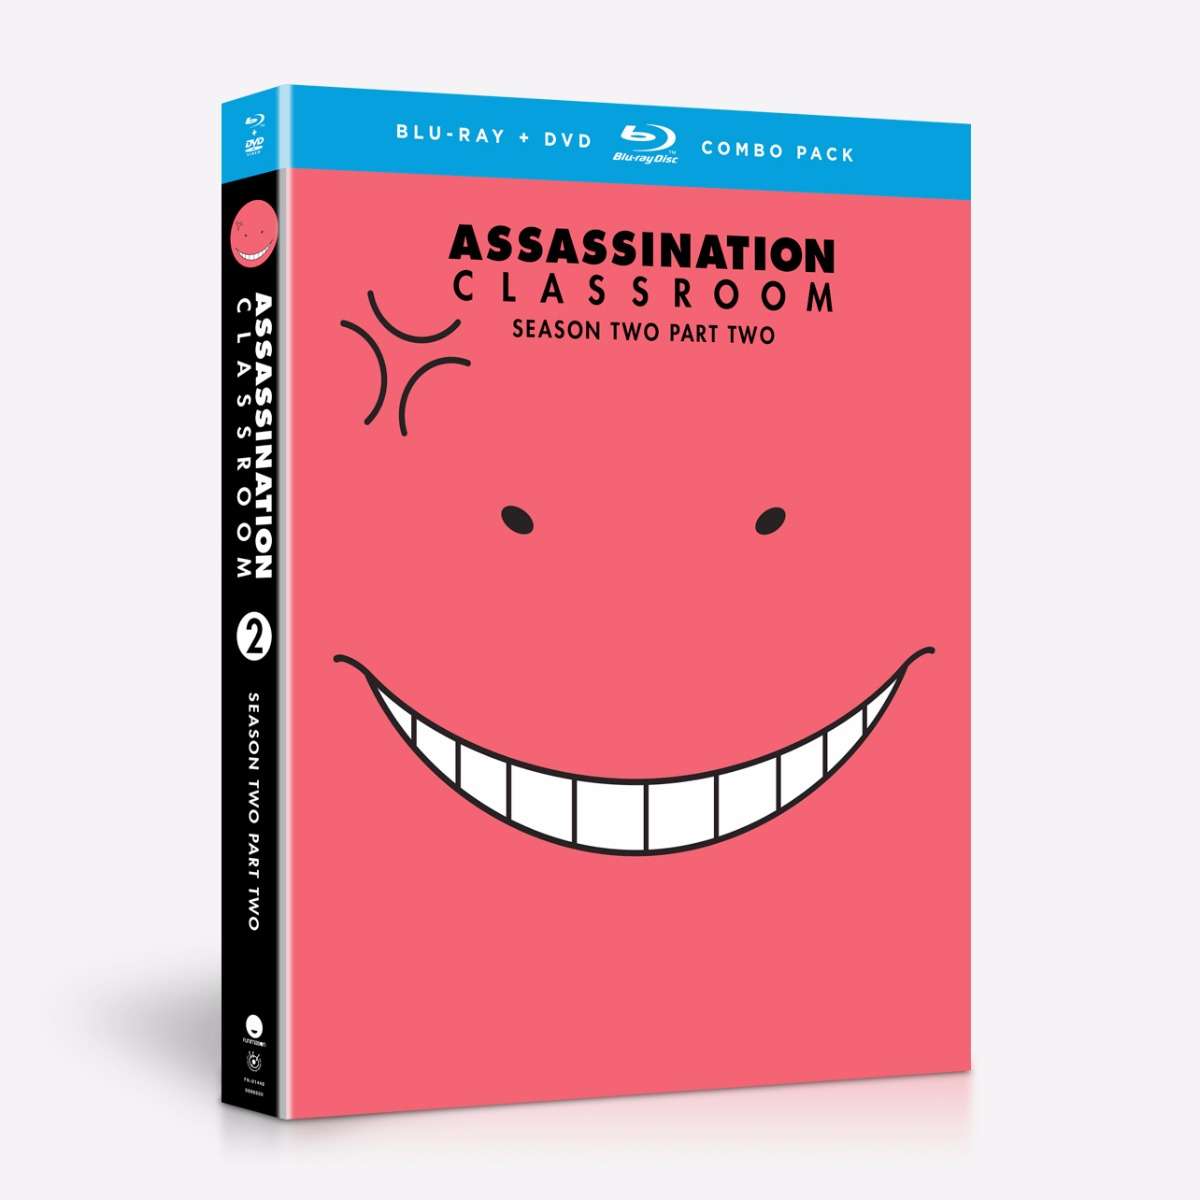 Anime Review: Assassination Classroom Season 2 Part 2